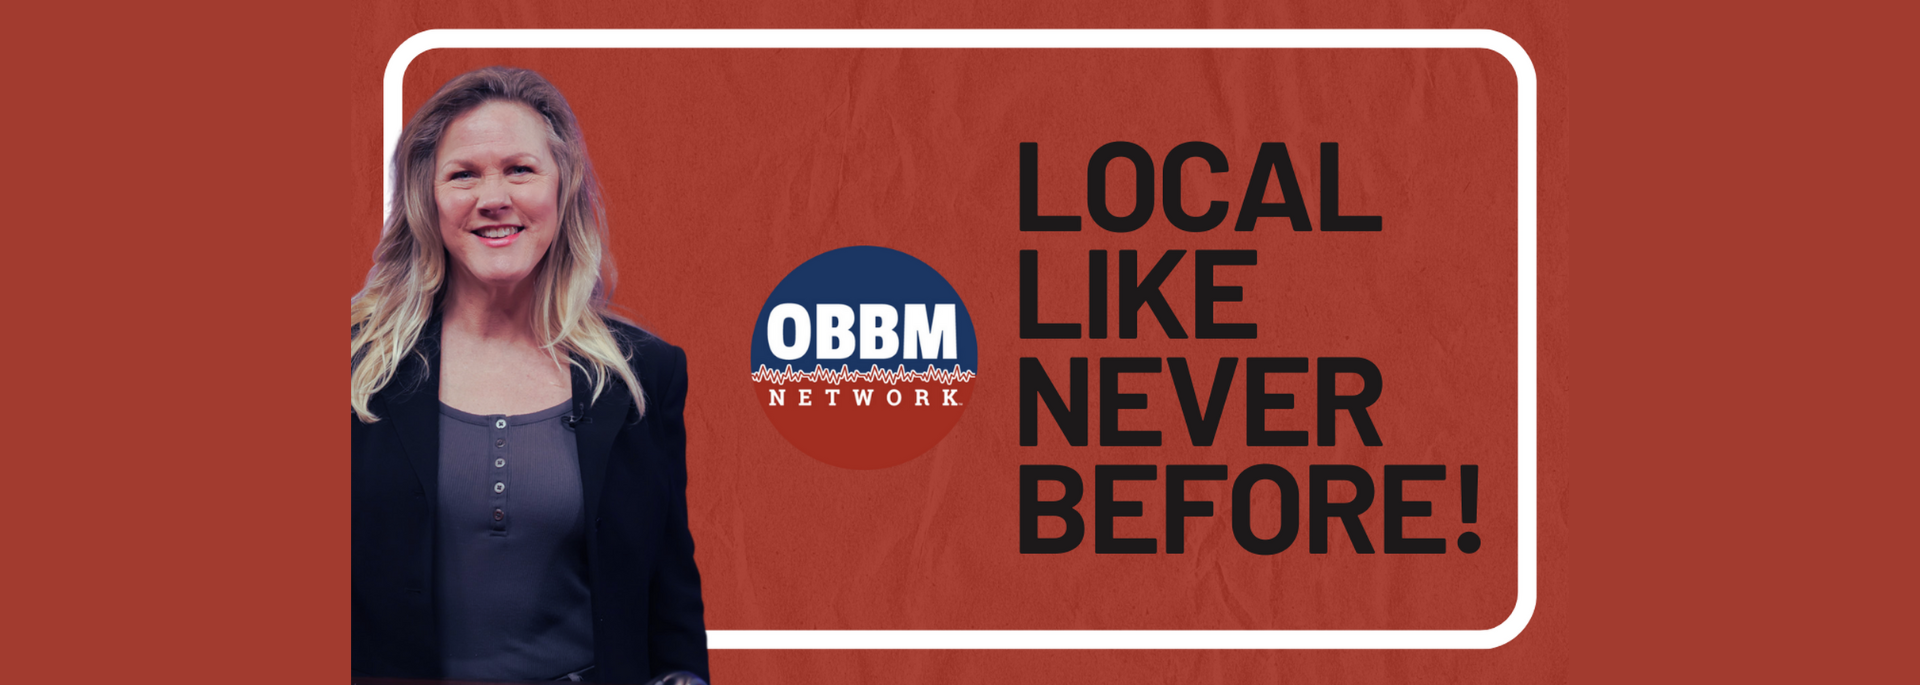 OBBM Network TV